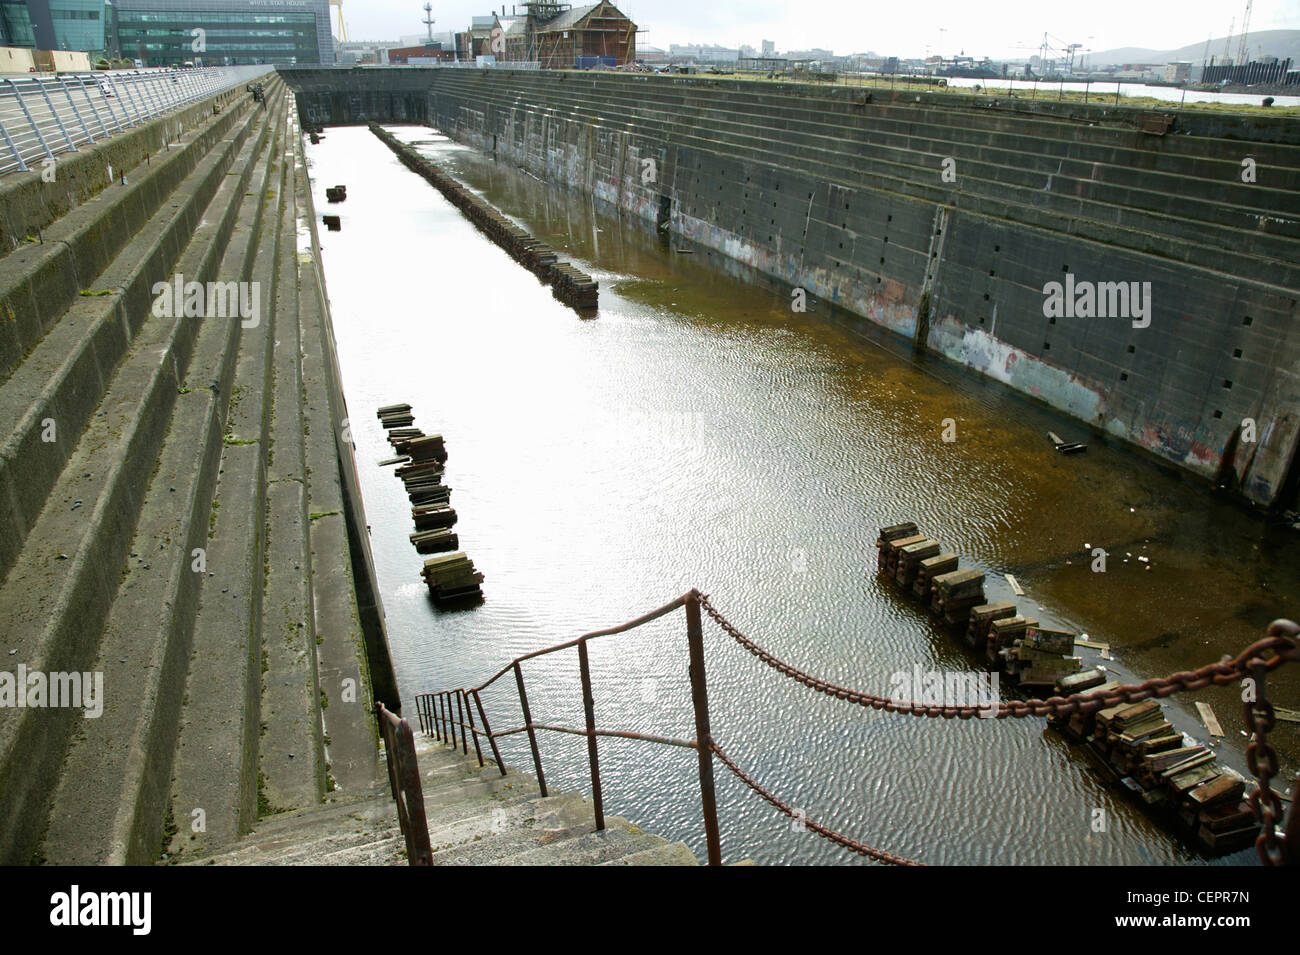 The Thompson Graving Dock in the Titanic quarter of Belfast Docks. Stock Photo